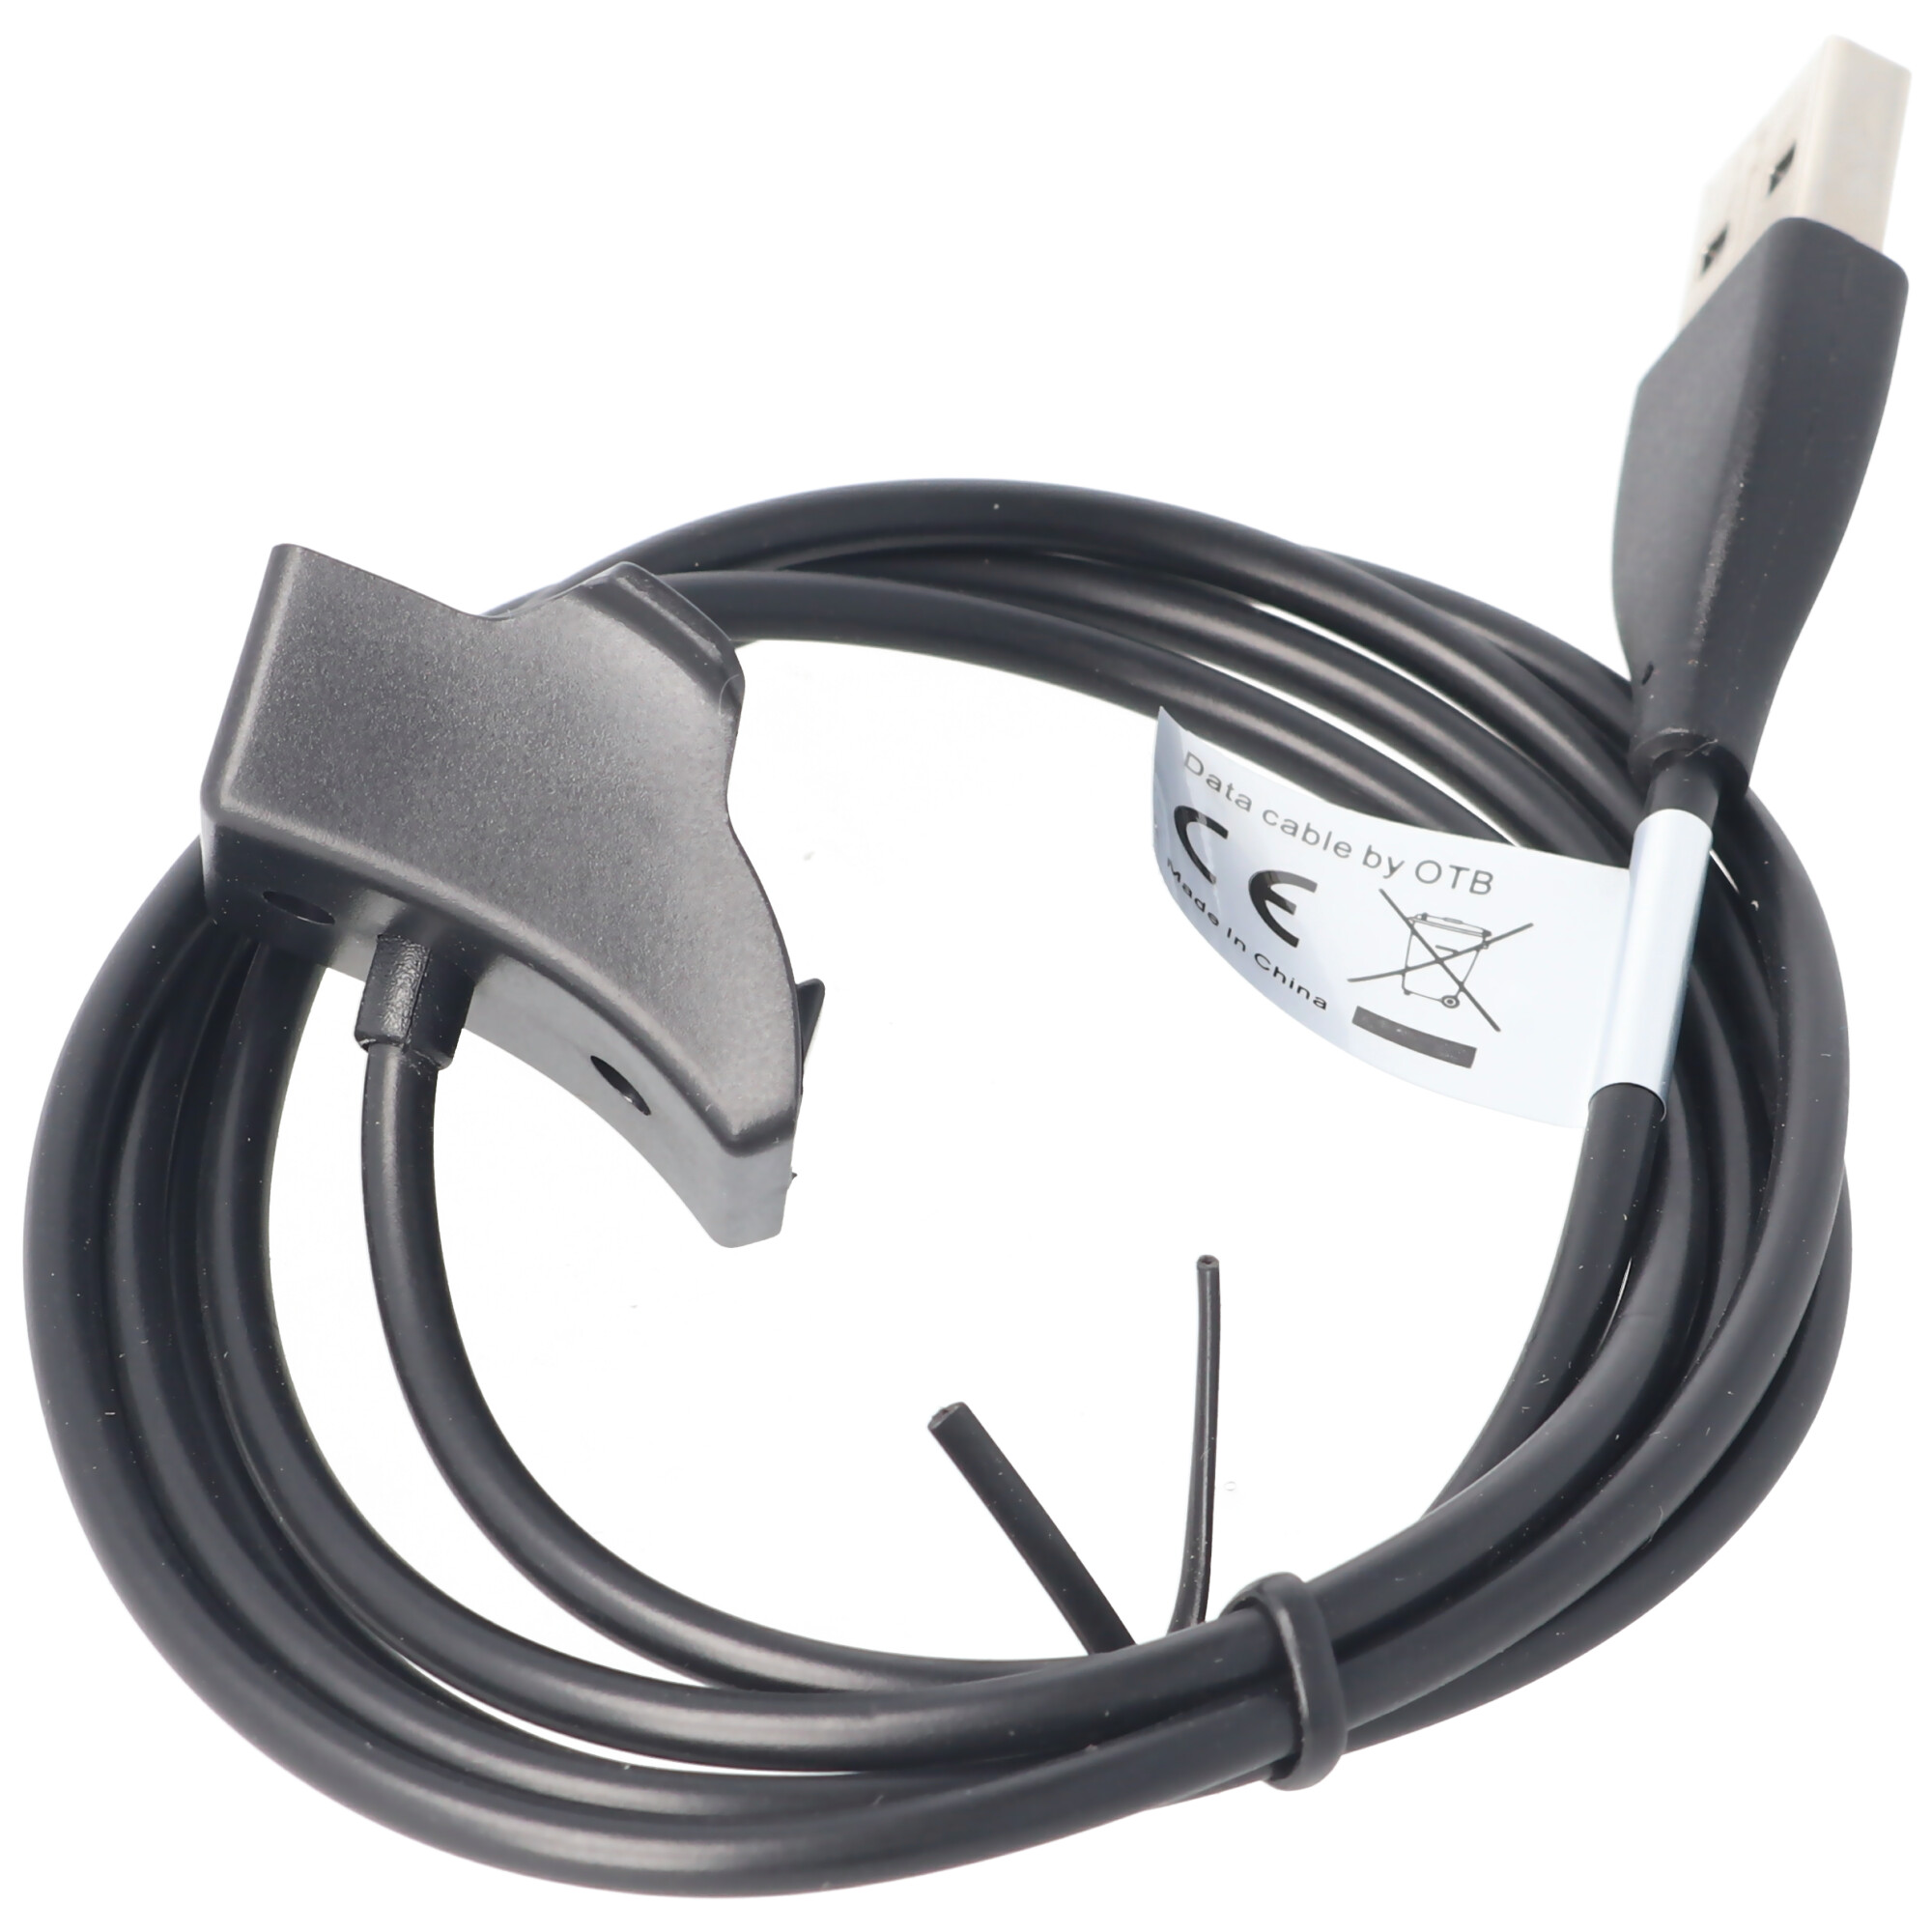 USB Ladekabel passend für Huawei Band 2 Fitnesstracker, Band 2 Pro, Huawei Band 3, Band 3 Pro, Honor Band 4